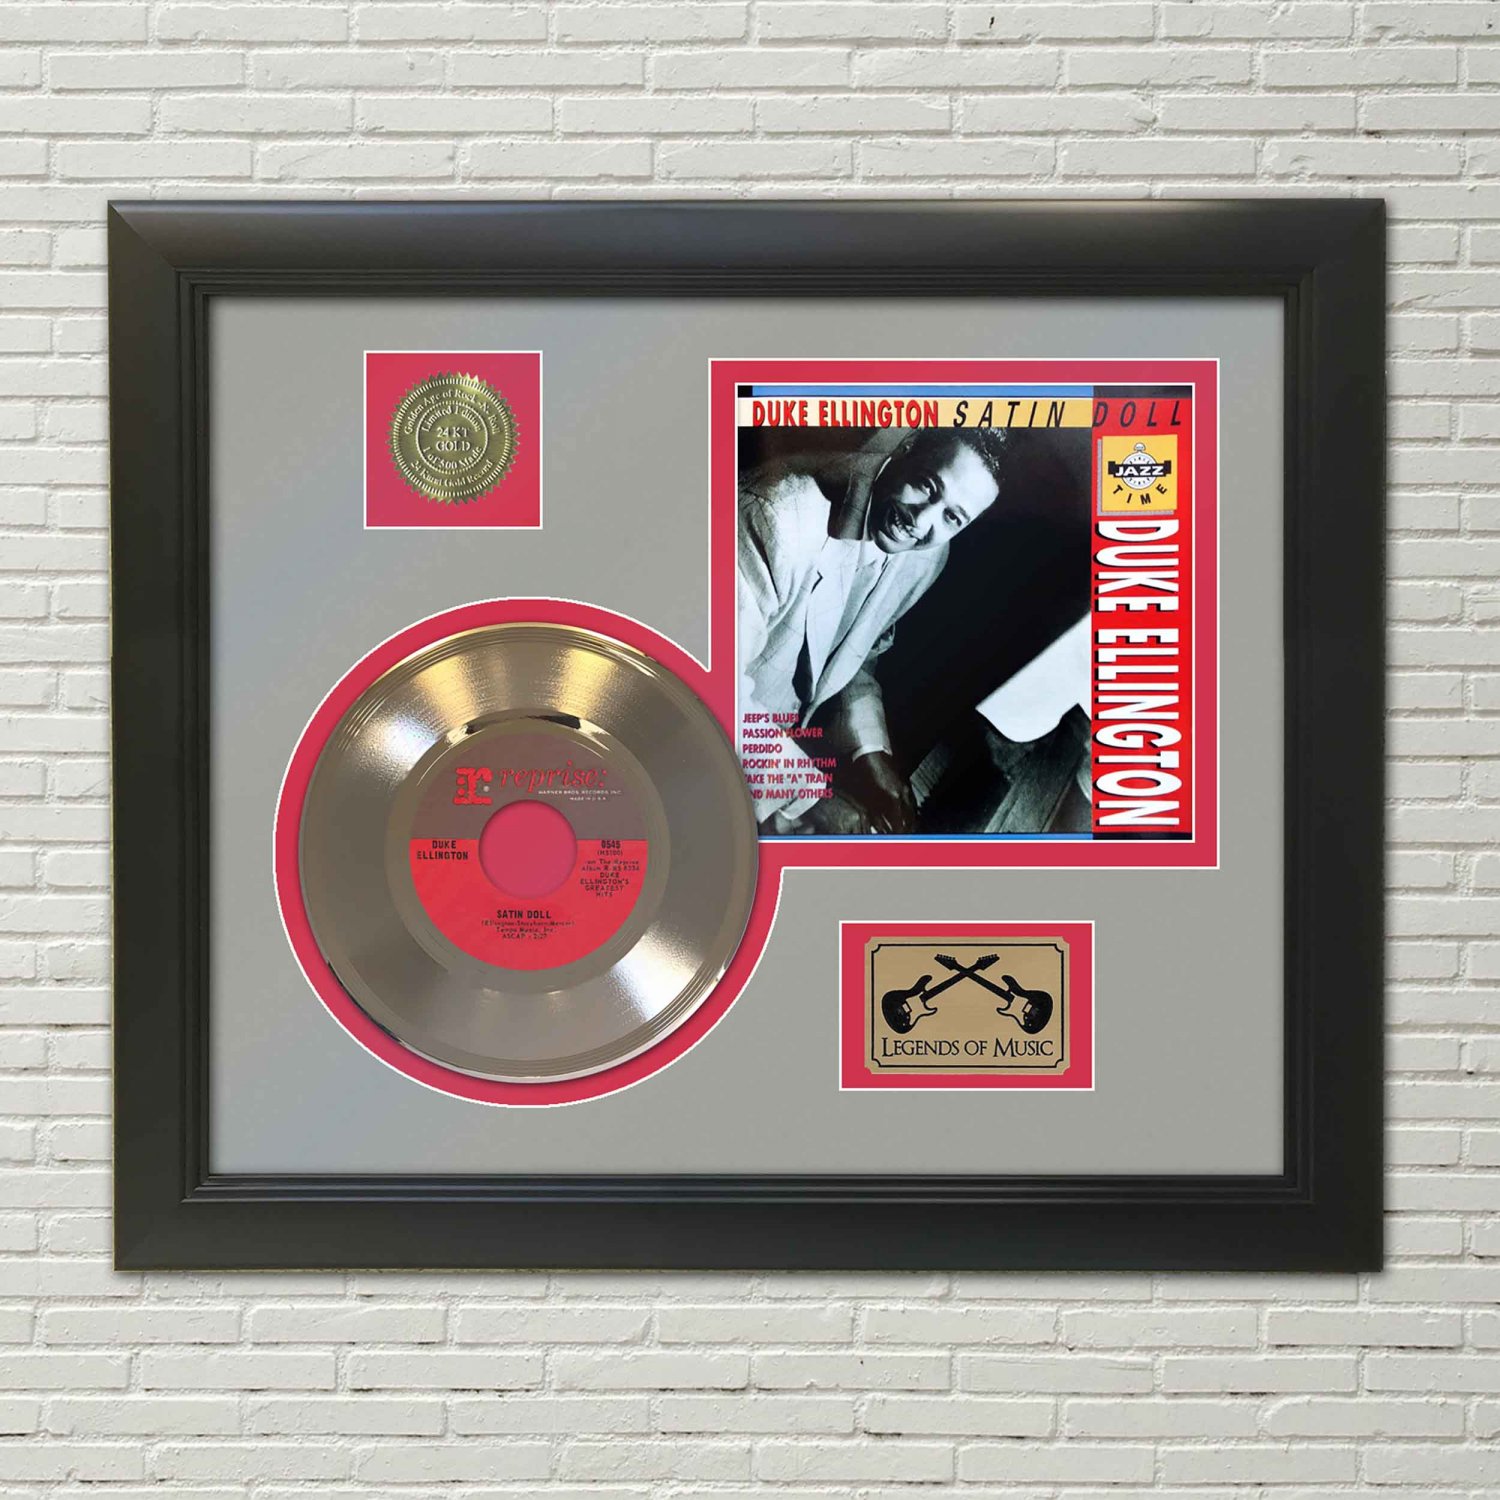 DUKE ELLINGTON "Satin Doll" Framed Picture Sleeve Gold 45 Record Display